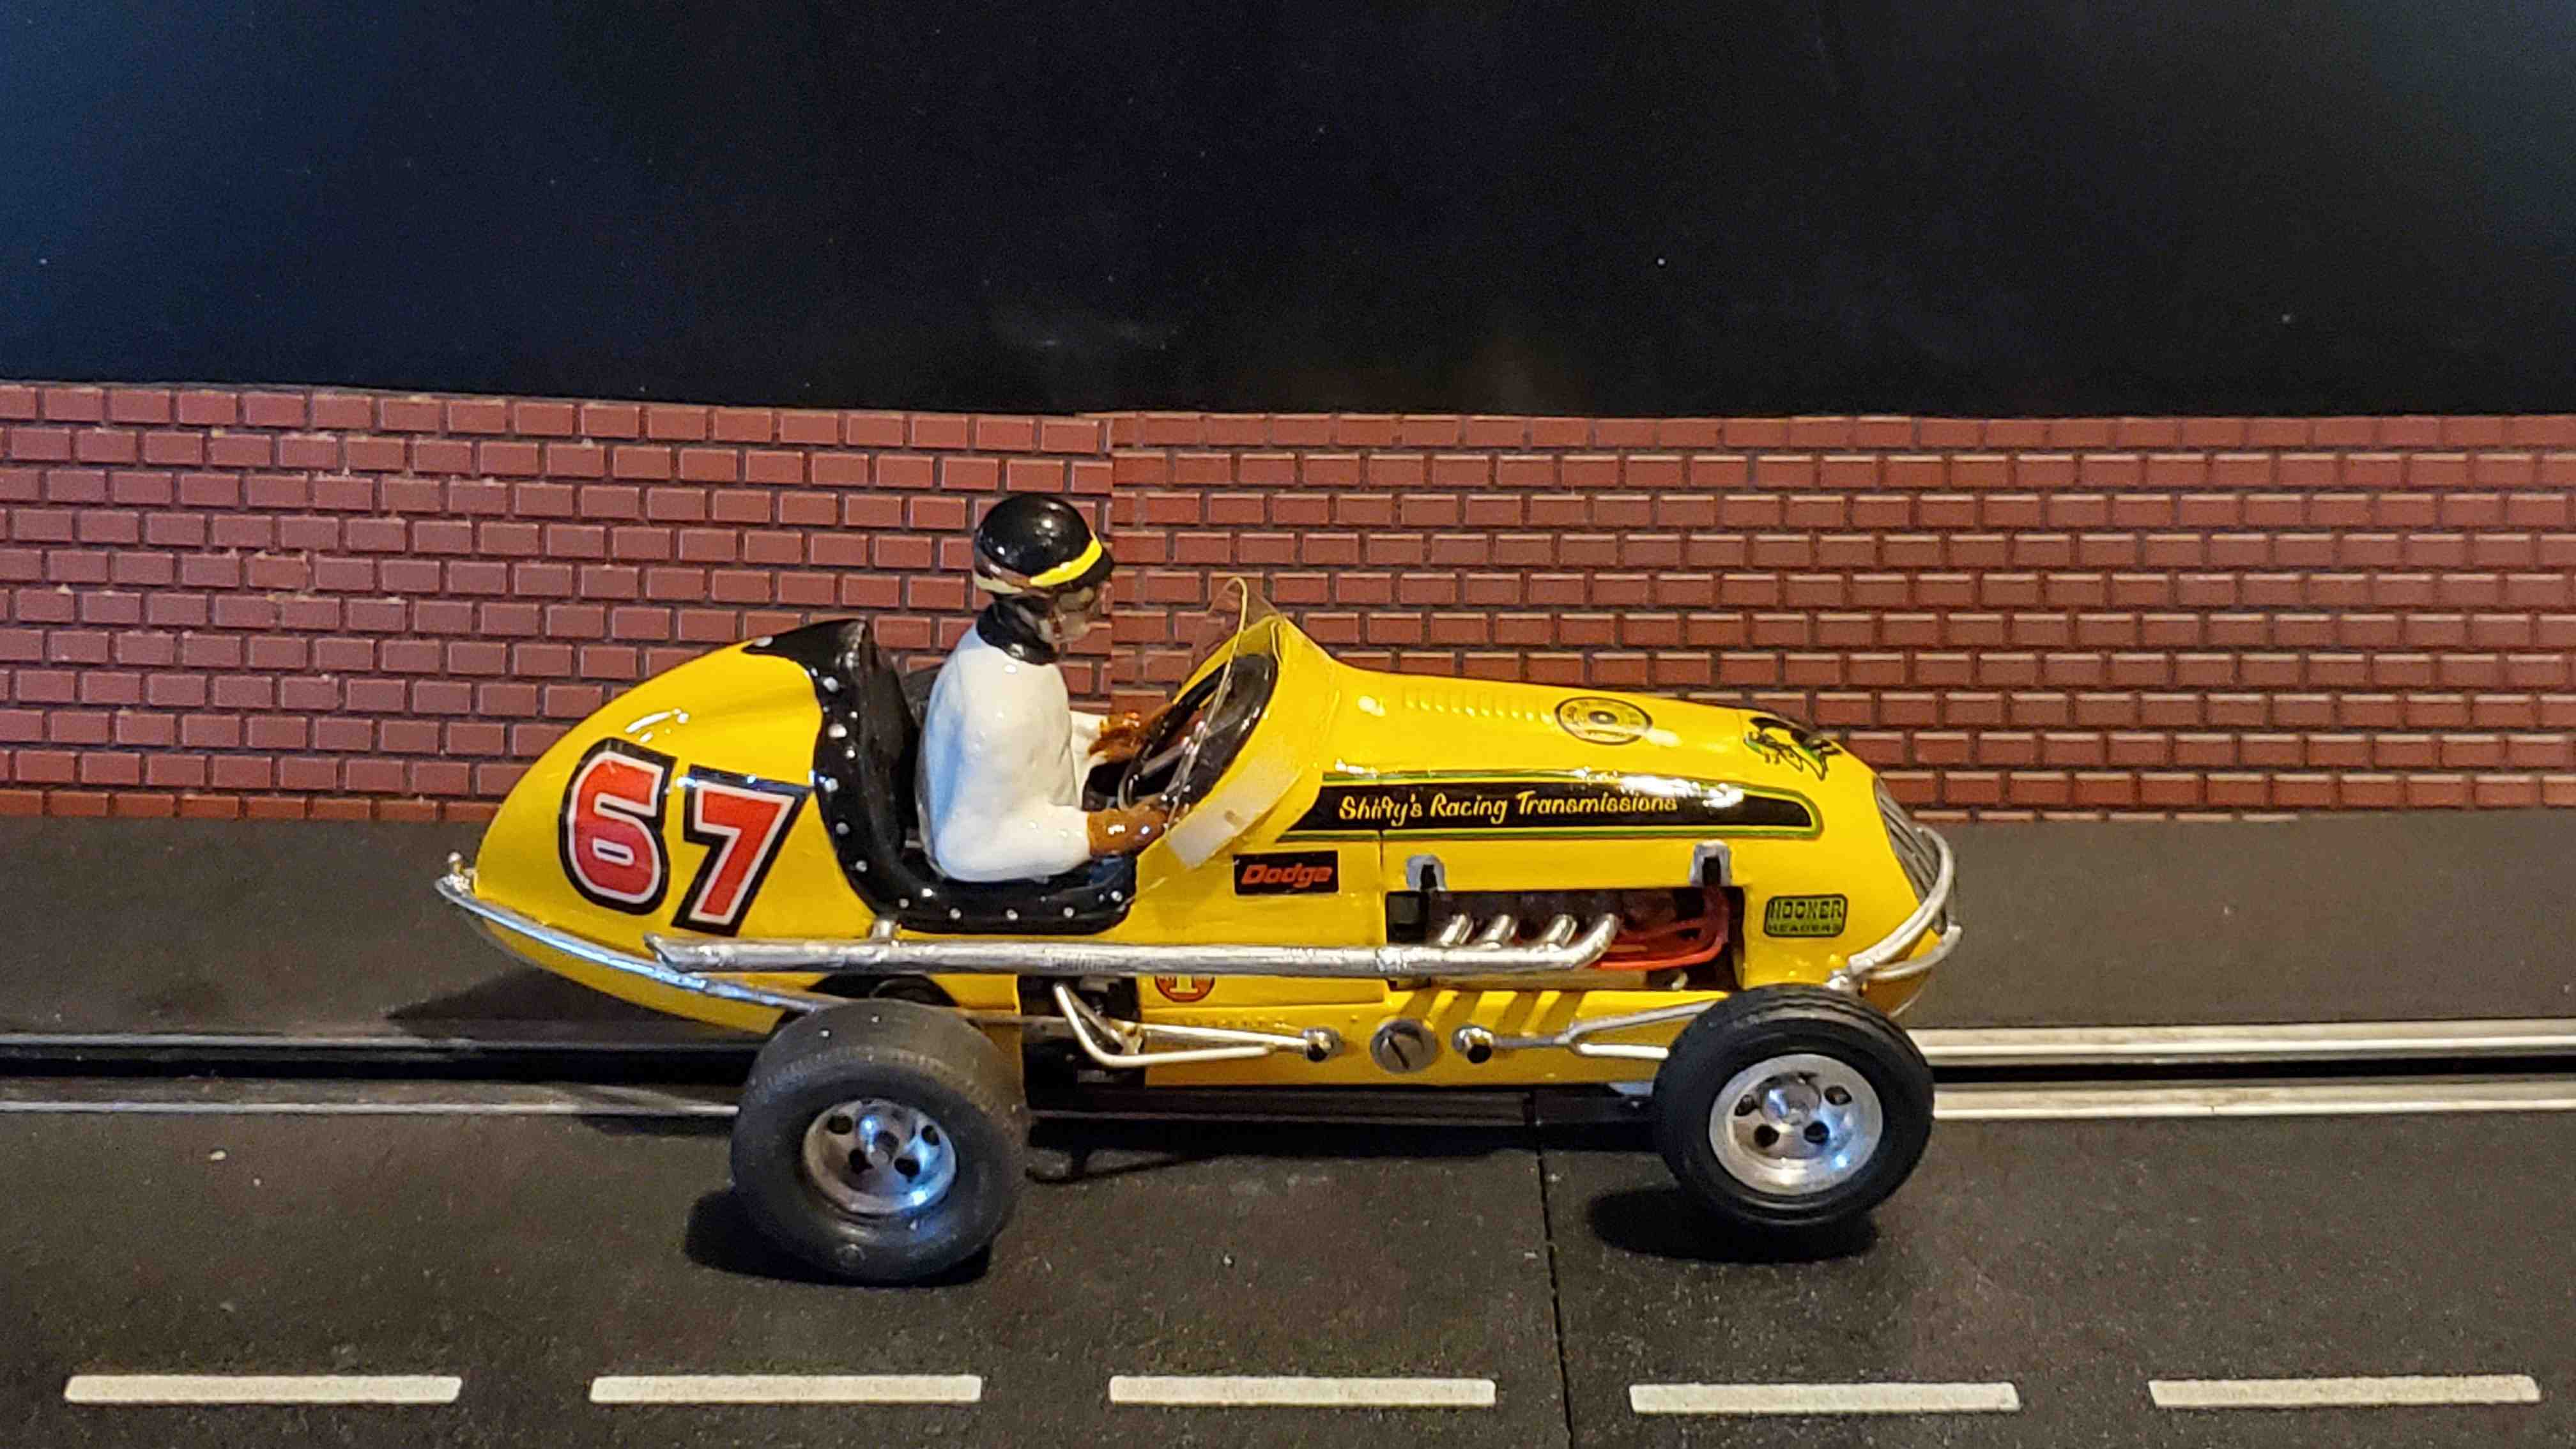 Monogram Midget Racer Yellow Streak Racing Special Slot Car 1/24 Scale – Car # 67